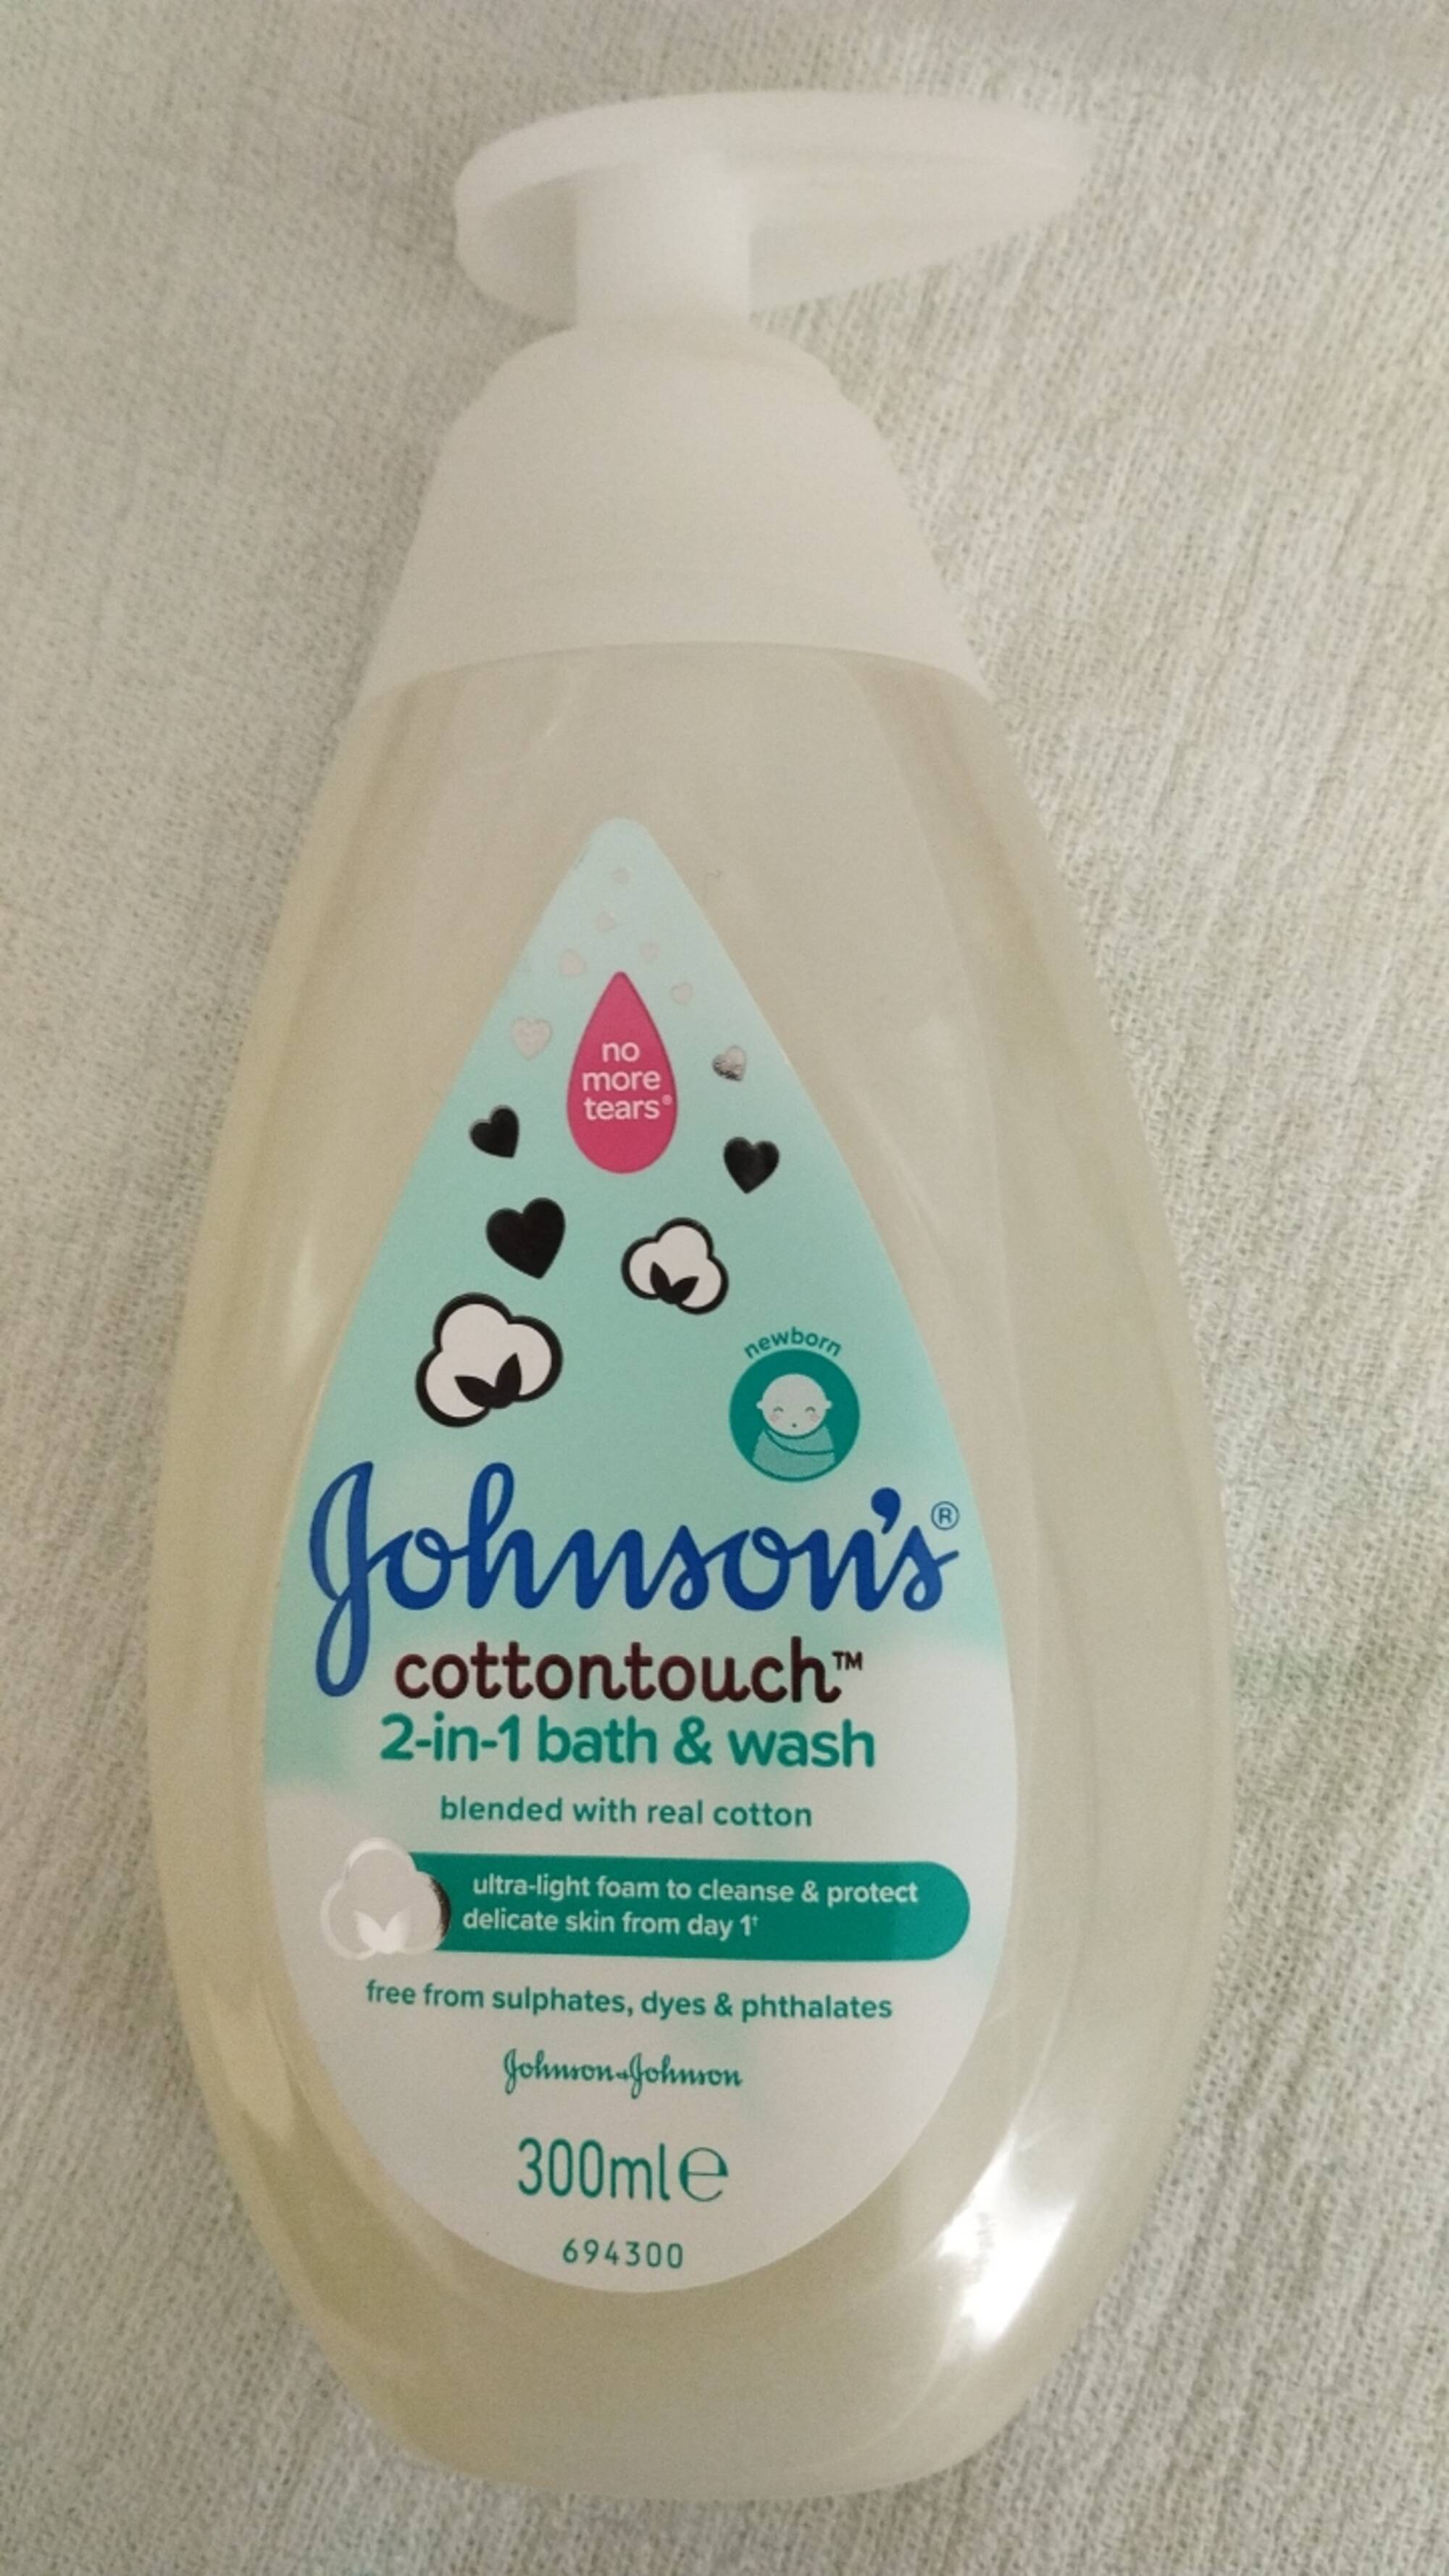 JOHNSON'S - Cottontouch - 2 in 1 bath & wash